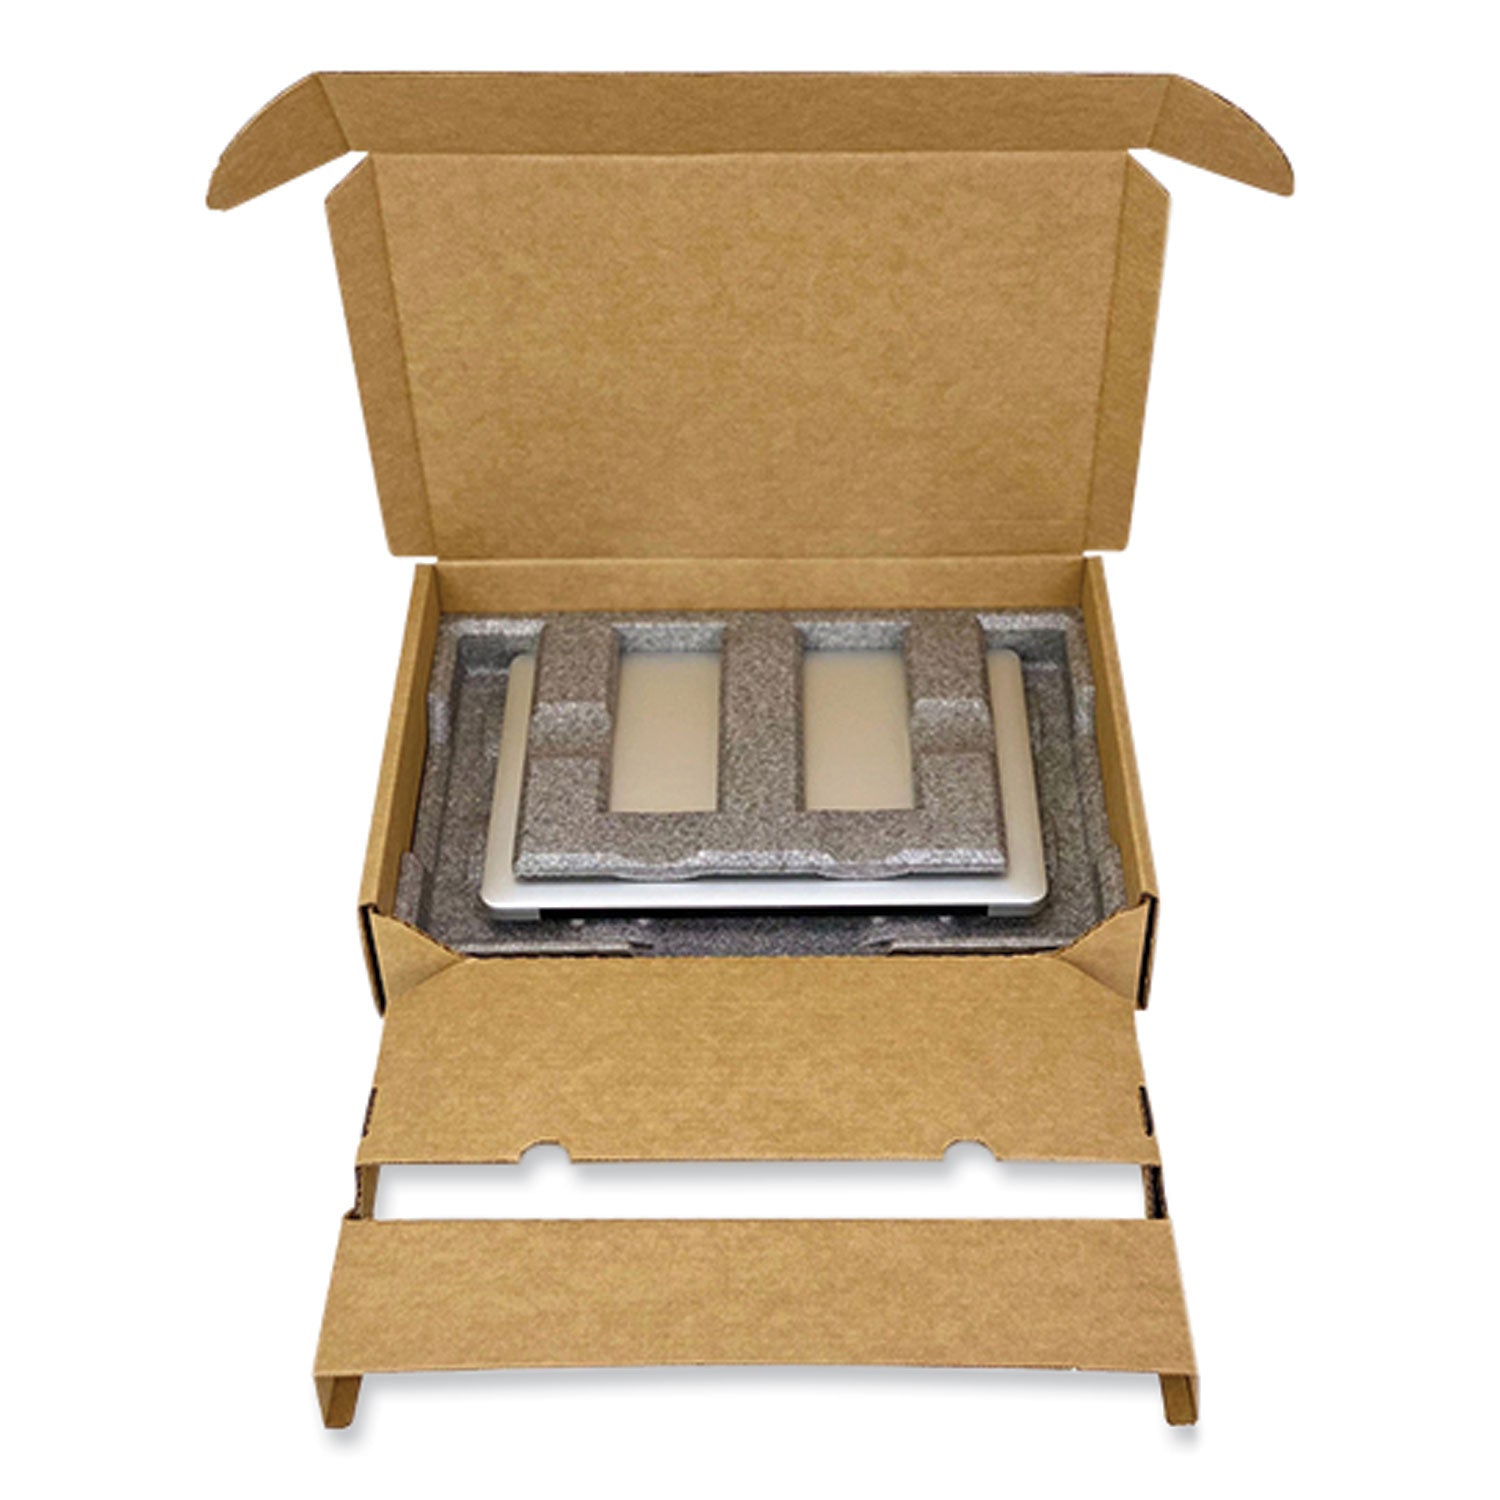 laptop-shipping-box-one-piece-foldover-opf-large-1725-x-1168-x-375-brown-kraft_epultcs00401 - 4